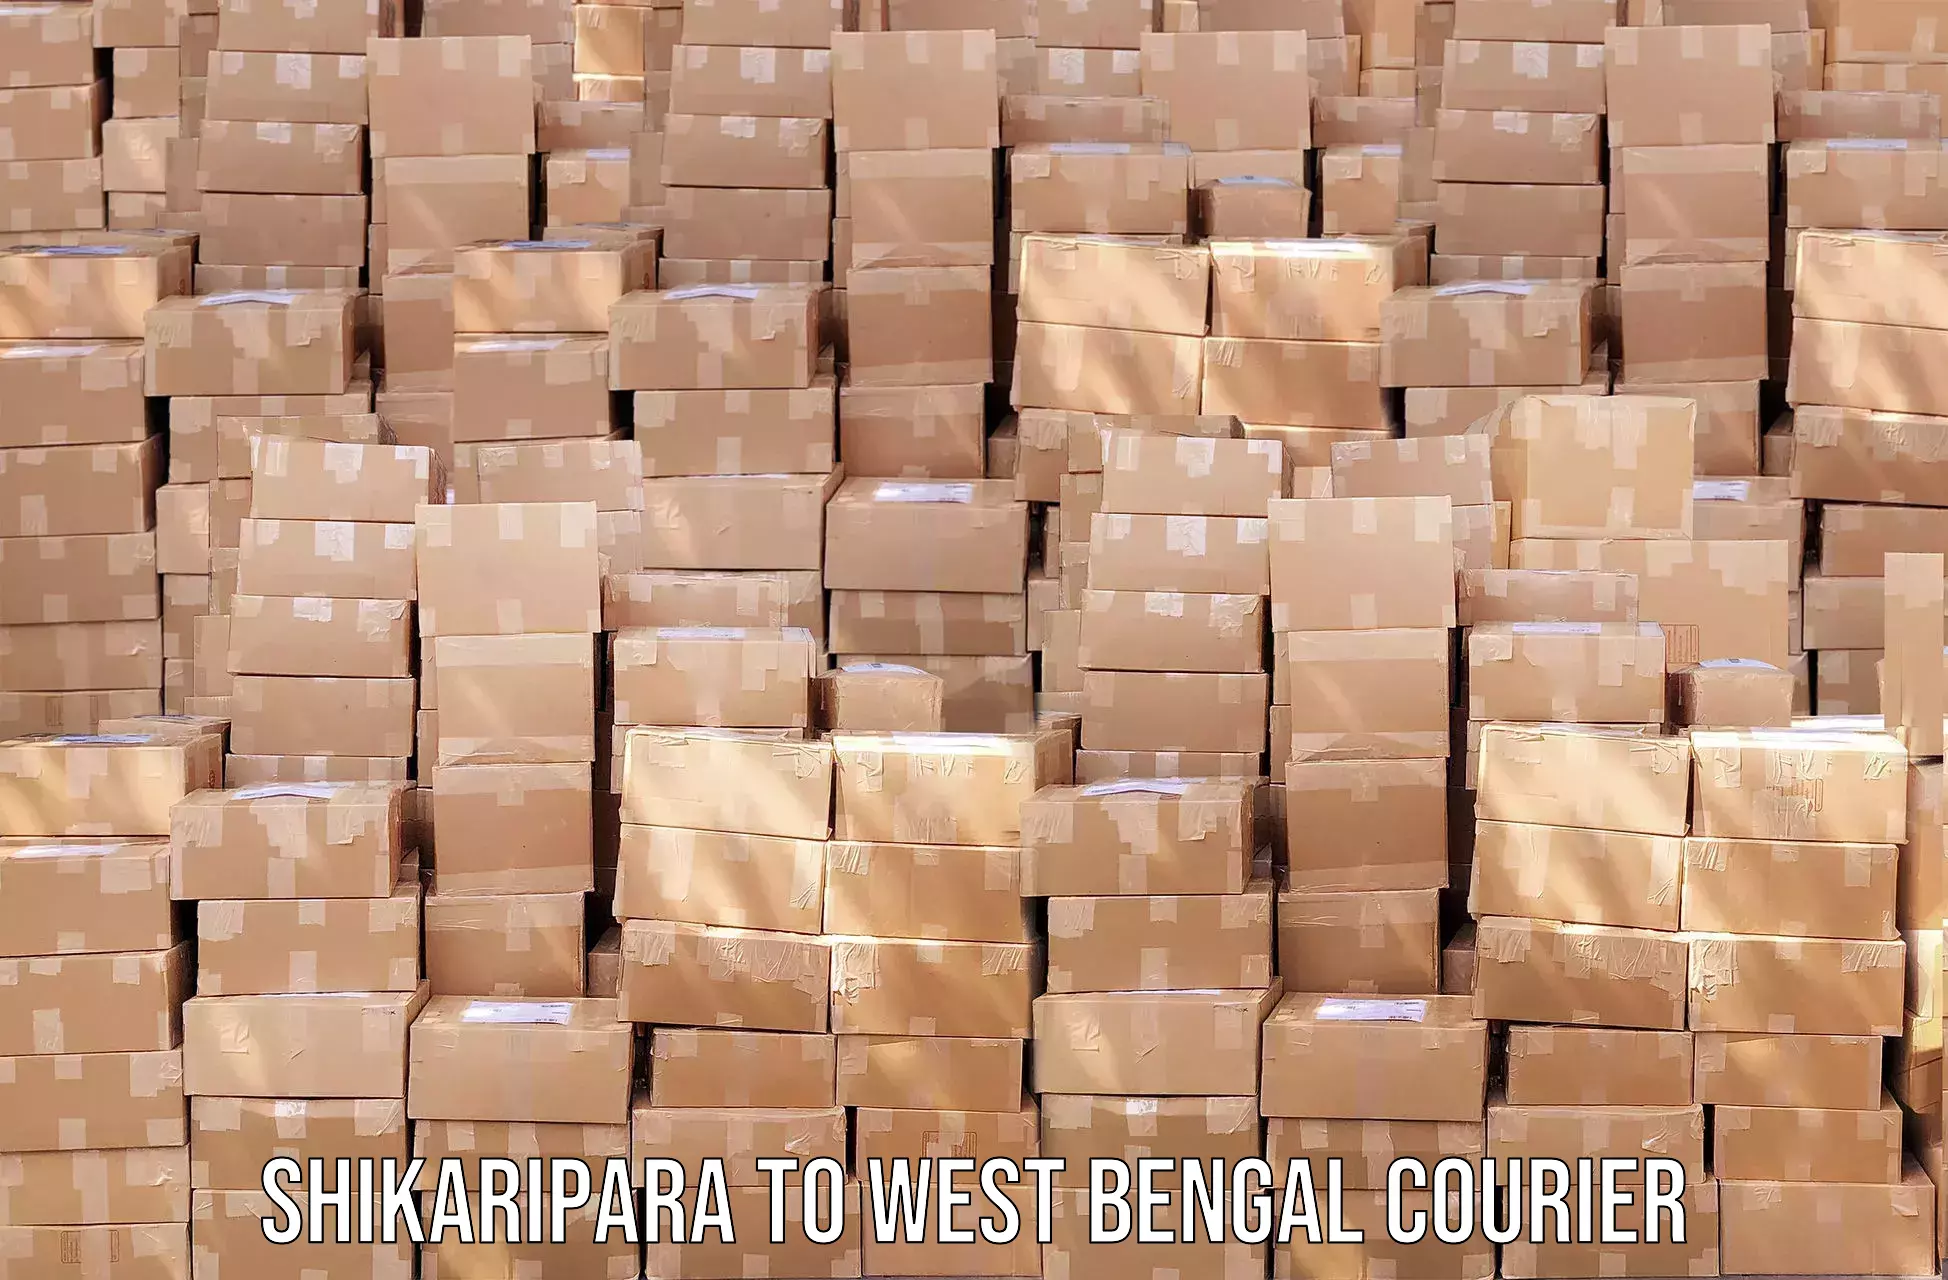 Multi-national courier services Shikaripara to Calcutta University Kolkata